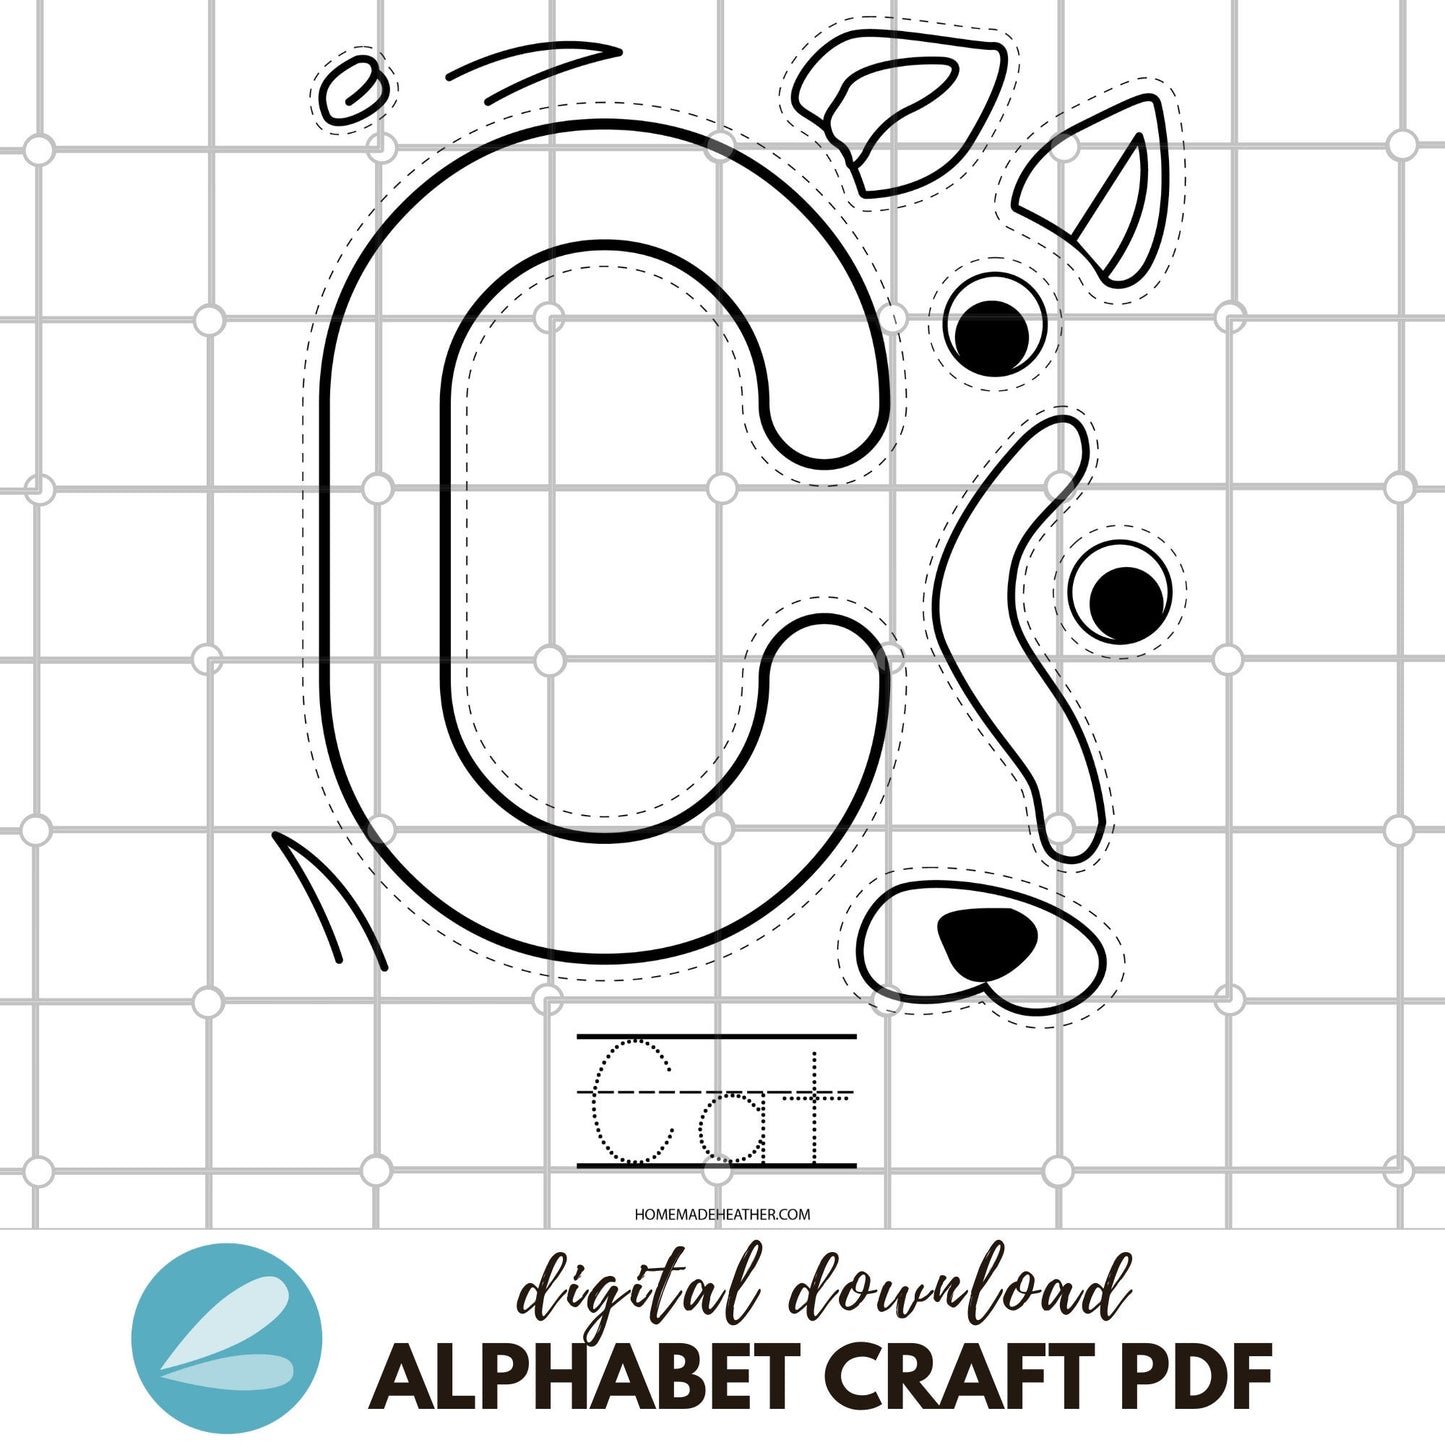 Alphabet Printable CRAFT Templates - Alphabet Animal Craft PDF - Instant Download